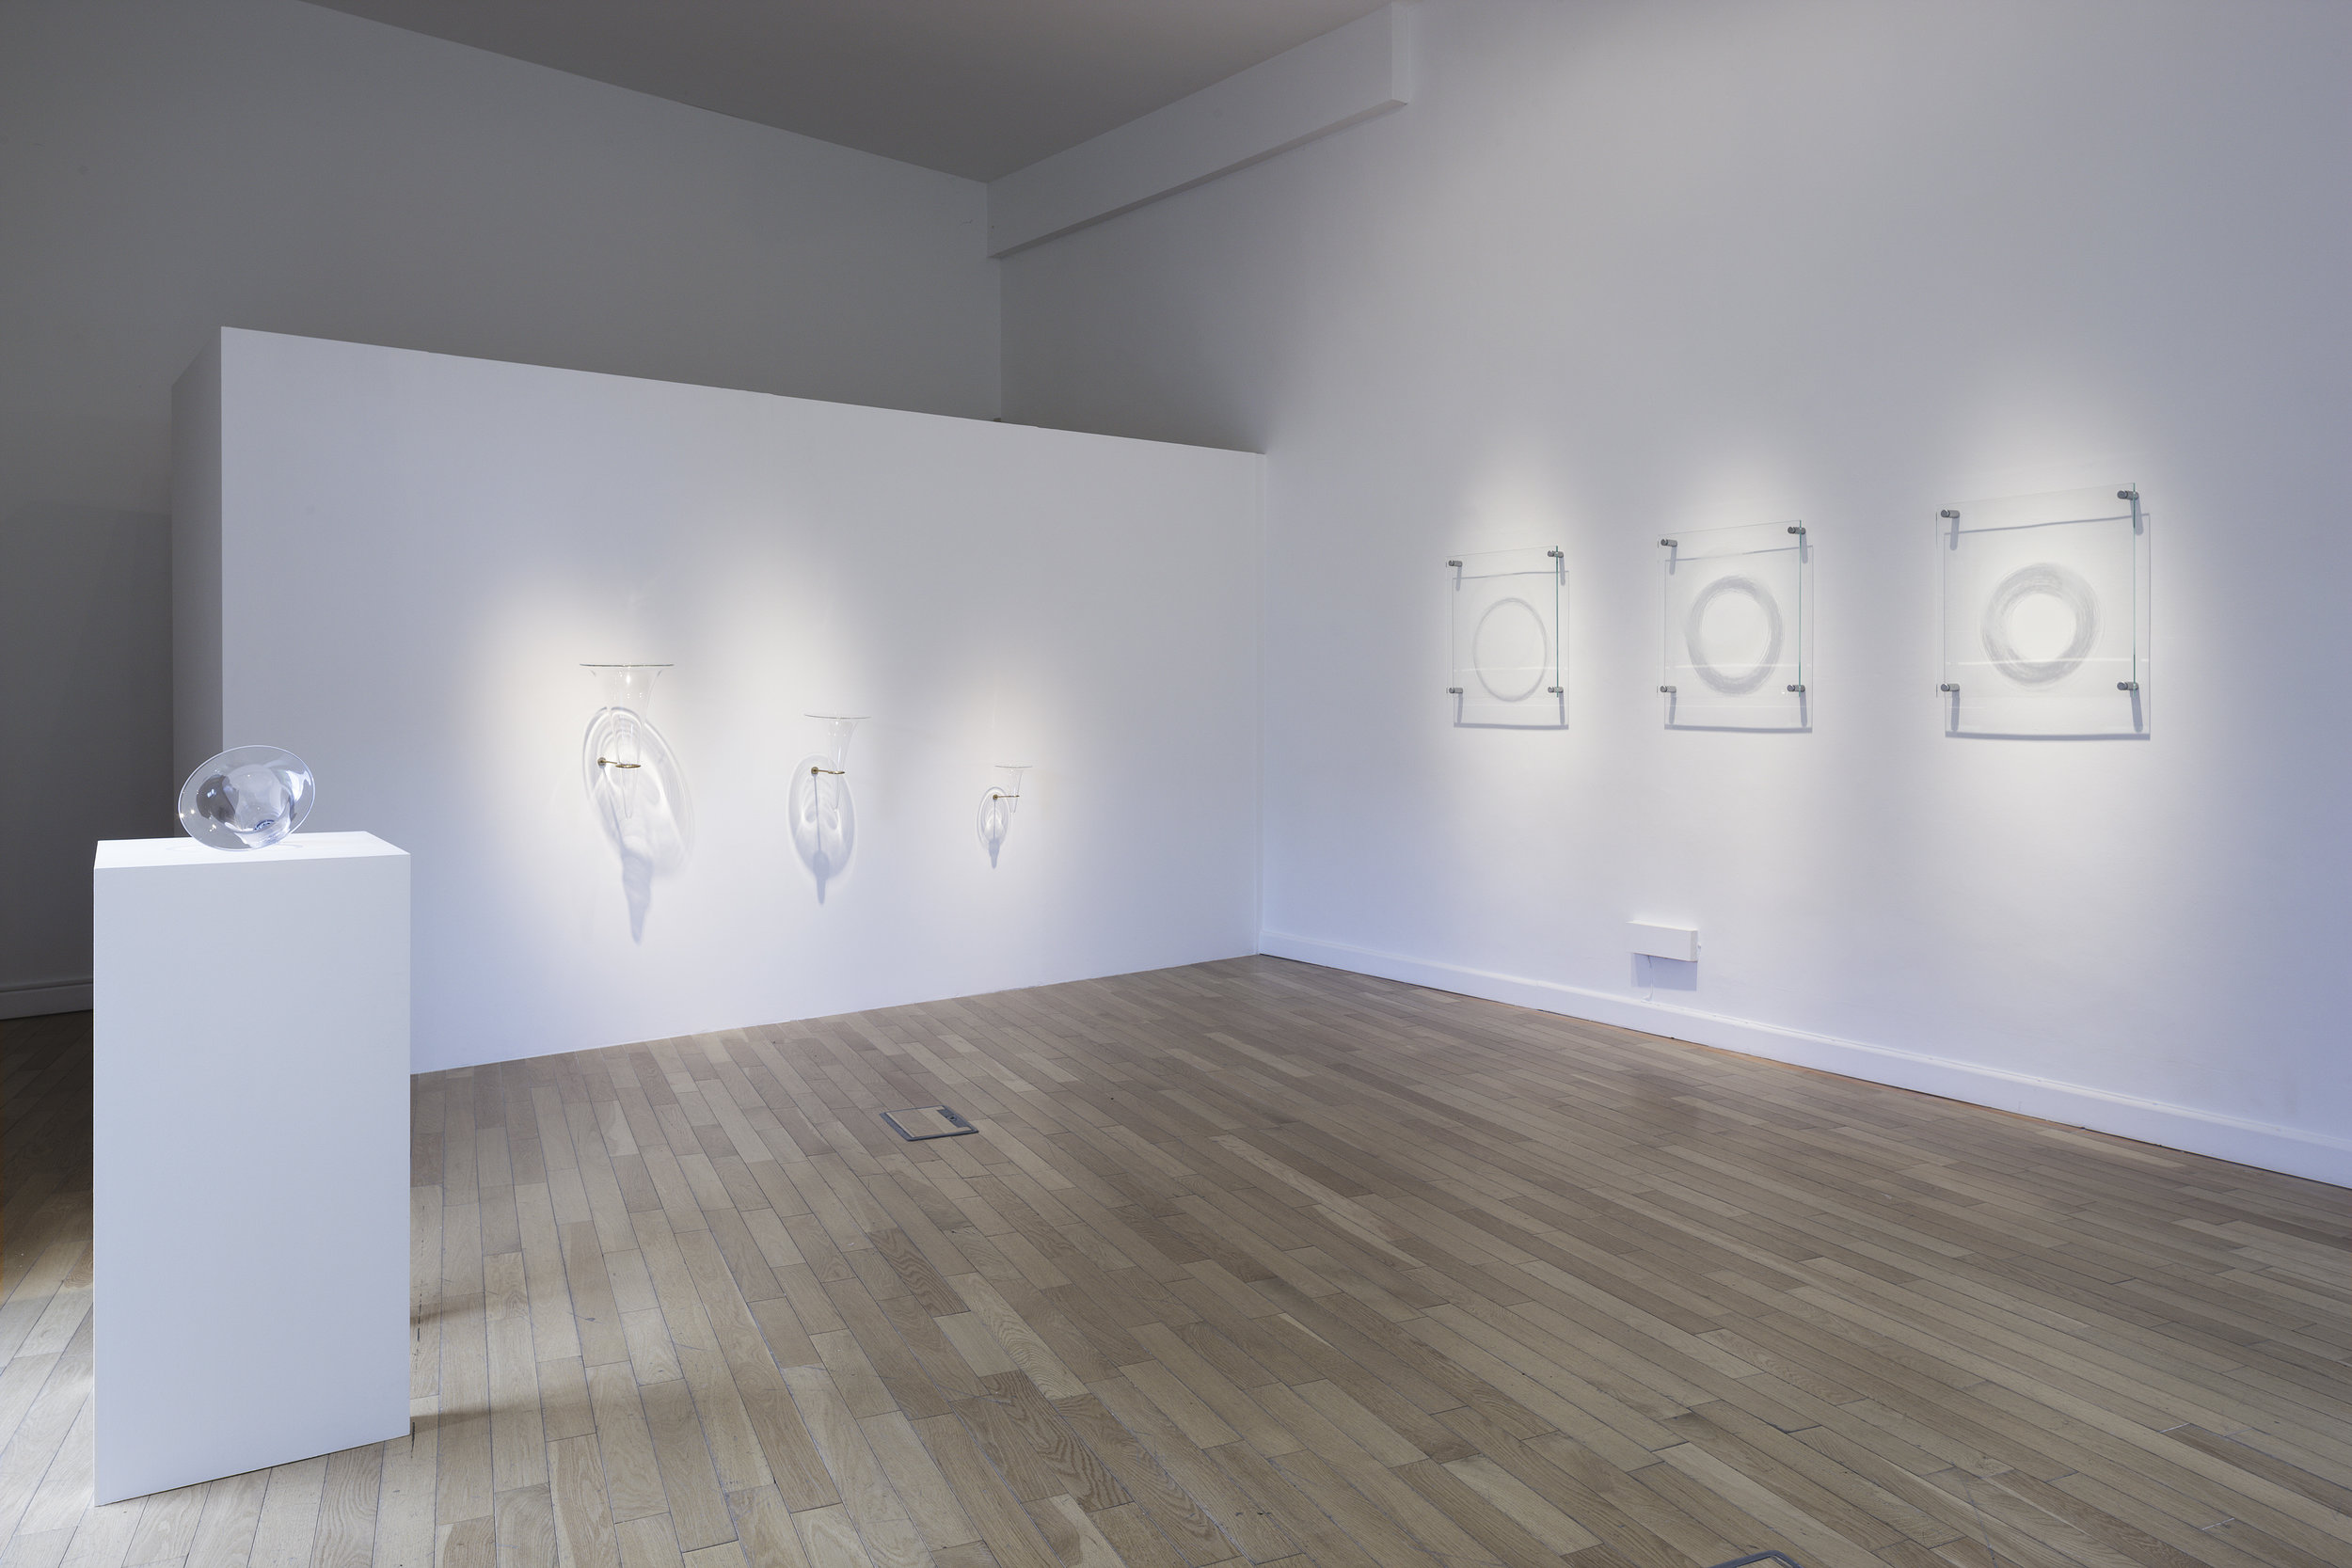  Cercle, Installation view, National Craft Gallery, Kilkenny, Ireland, 2014 